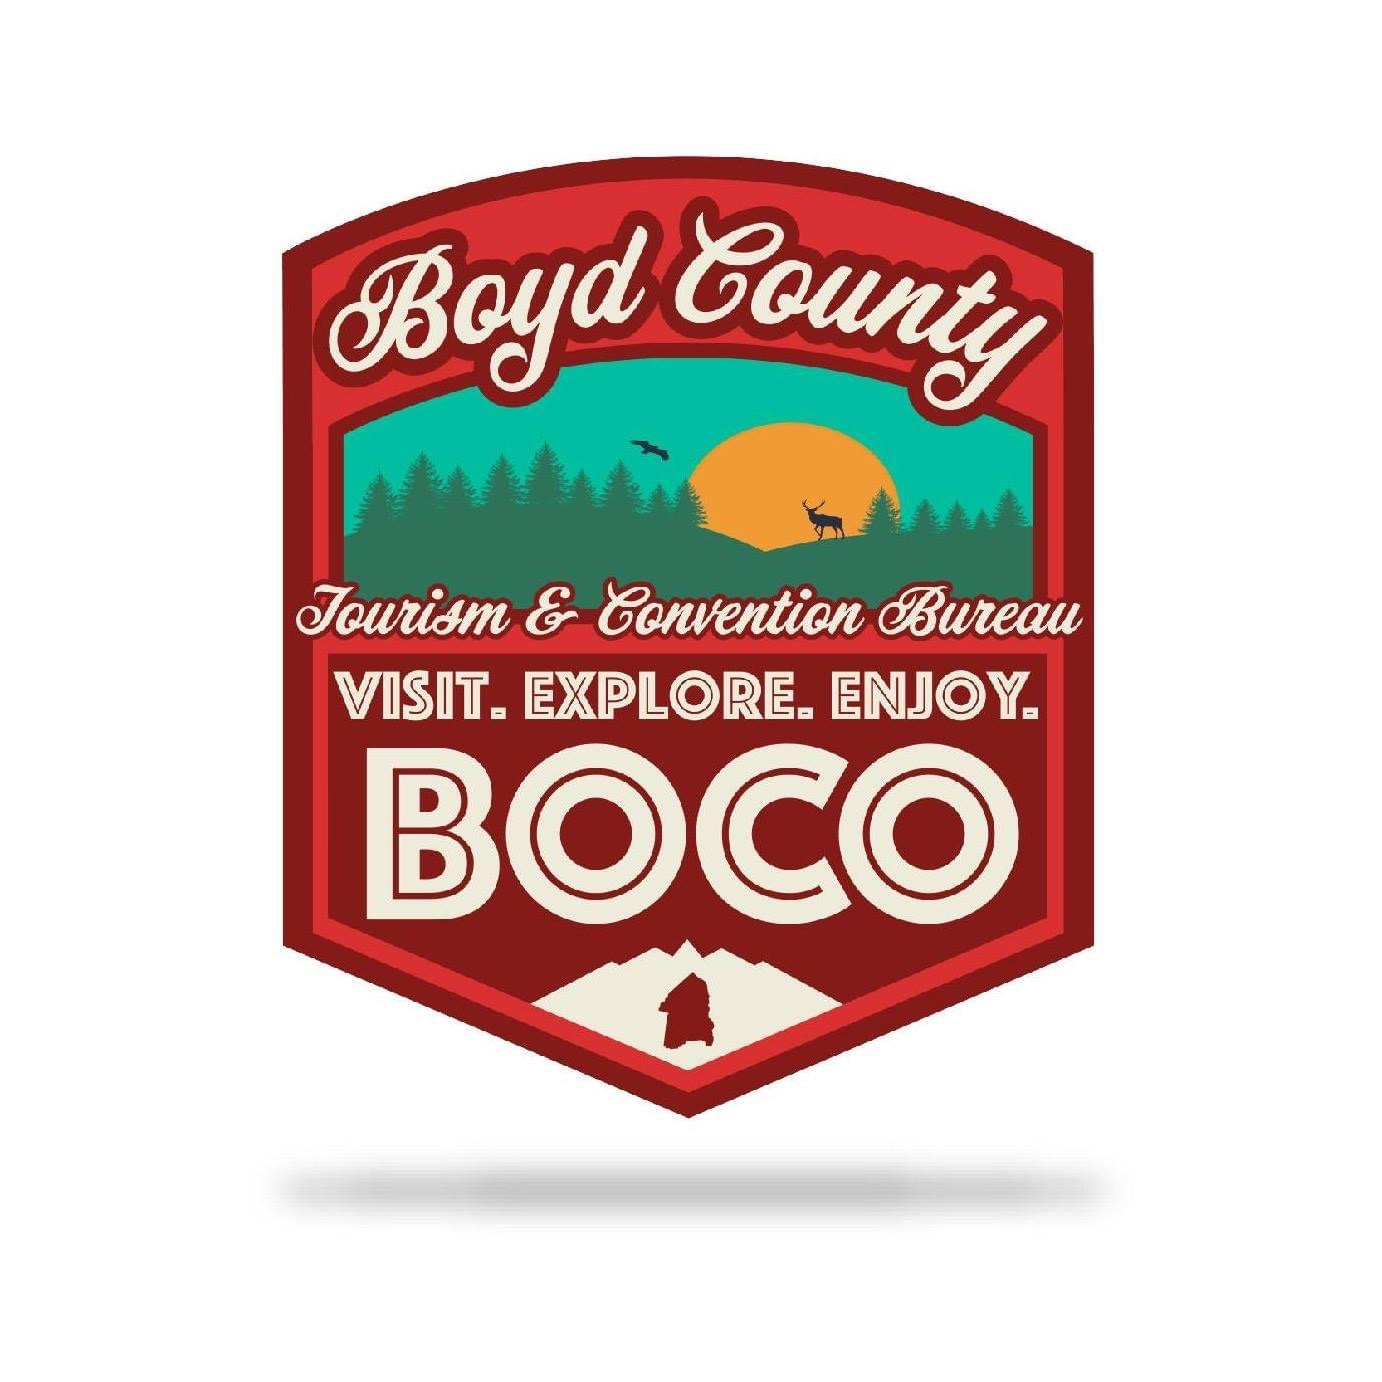 Boyd County Tourism & Convention Bureau